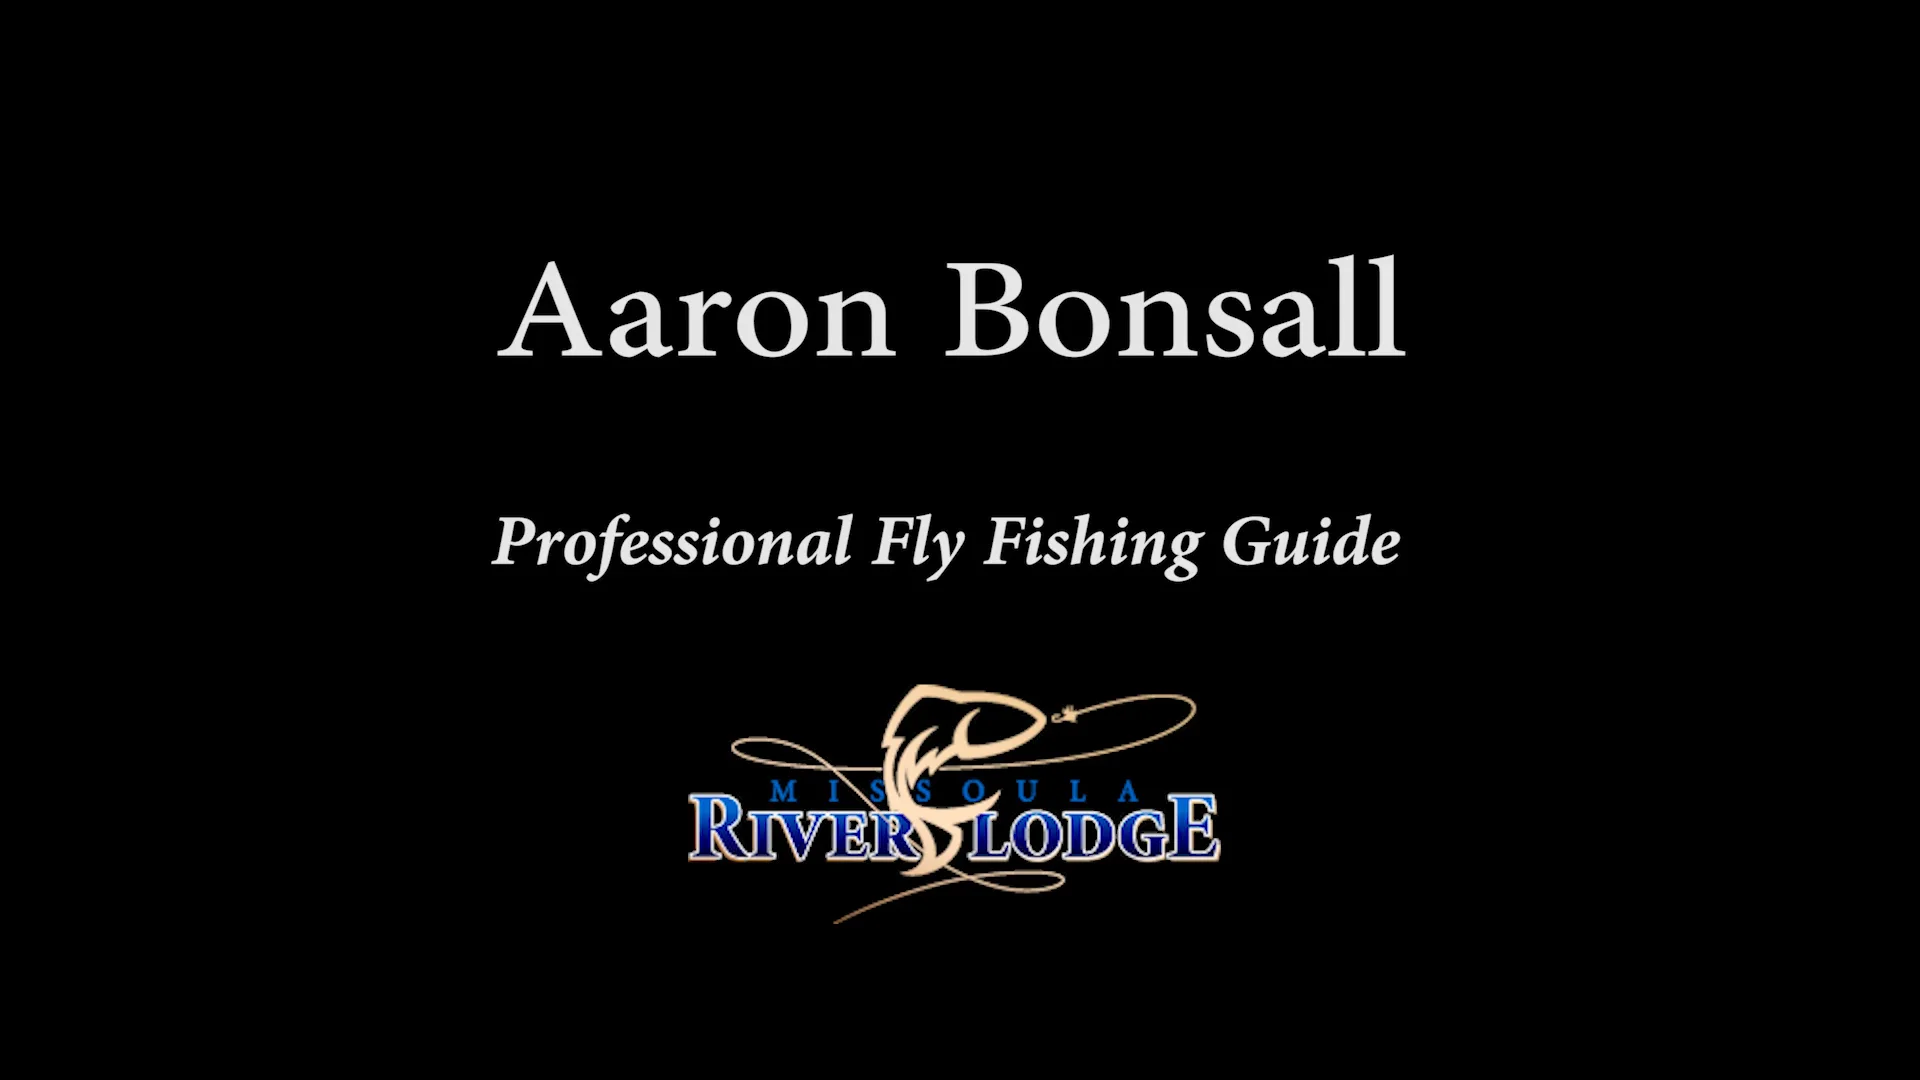 Montana Fly Fishing Guide Interview - Aaron Bonsall - Missoula River Lodge  on Vimeo